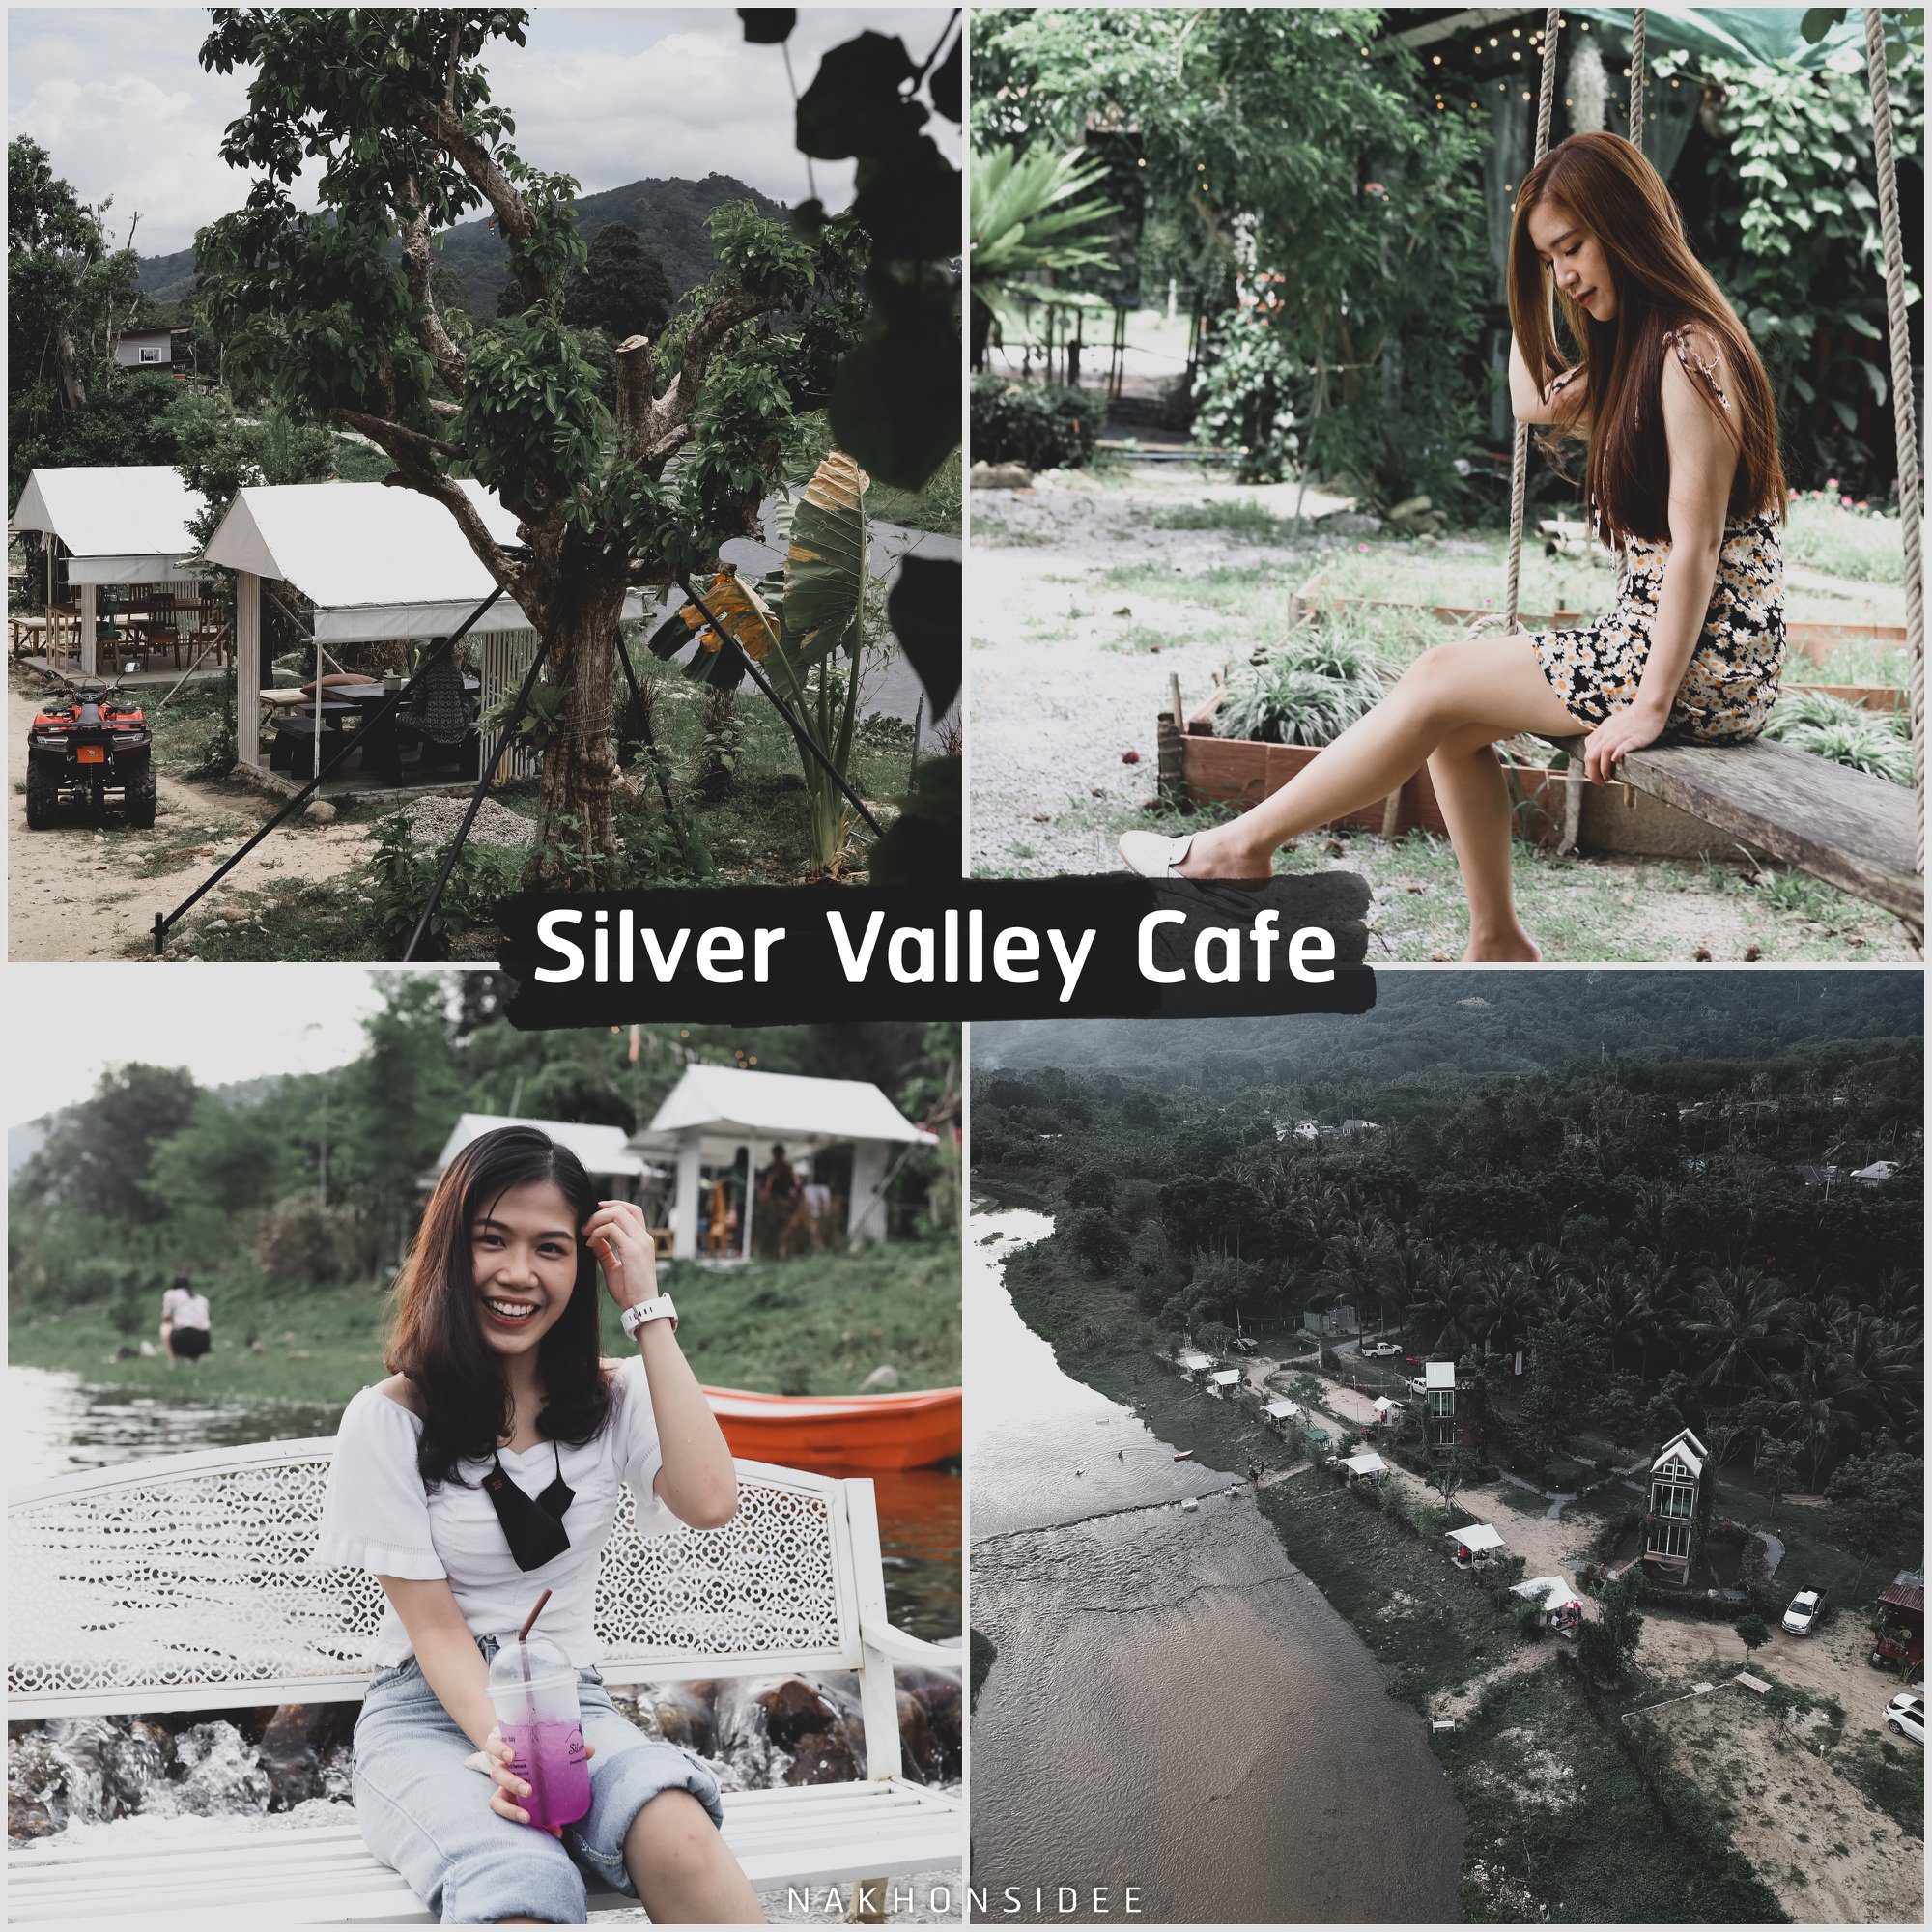  Silver-Valley-Cafe
คลิกที่นี่ คาเฟ่สวย,วิวหลักล้าน,นครศรีธรรมราช,รวมcafe,คาเฟ่,ร้านอาหาร,ร้านกาแฟ,ภูเขา